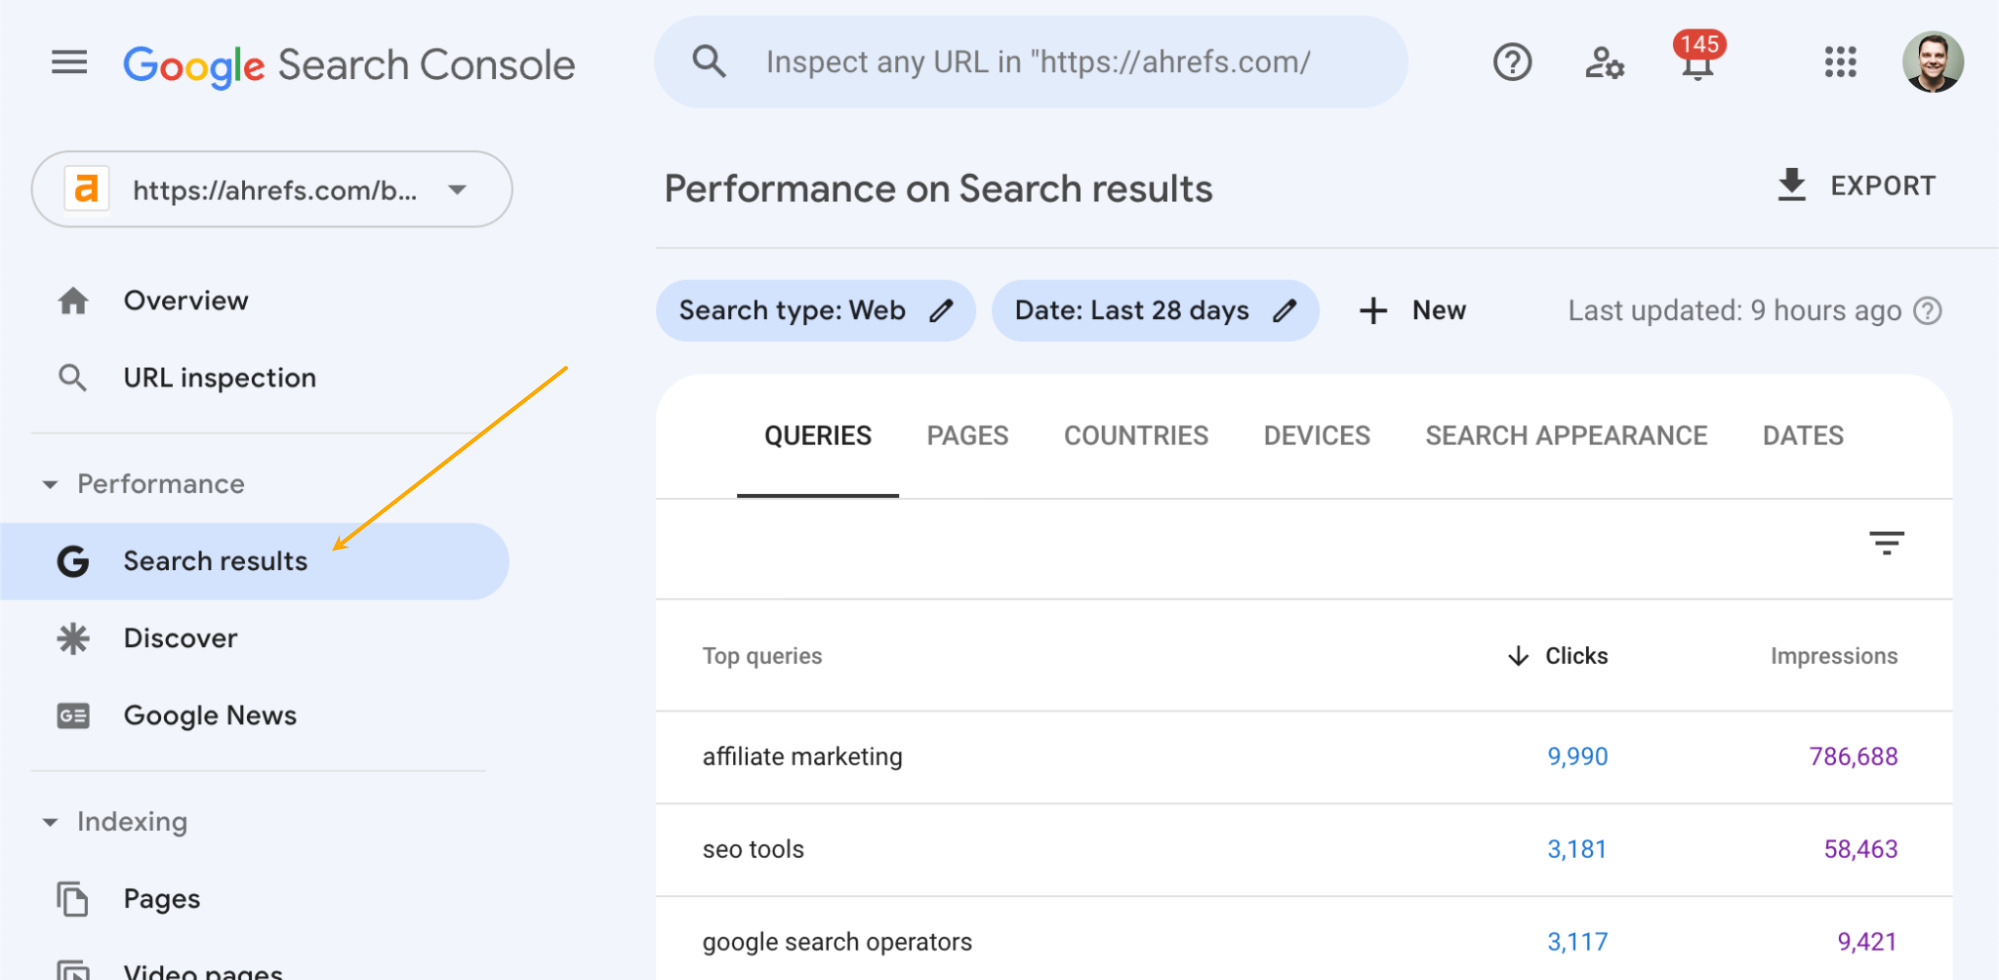 Search results report in Google Search Console
